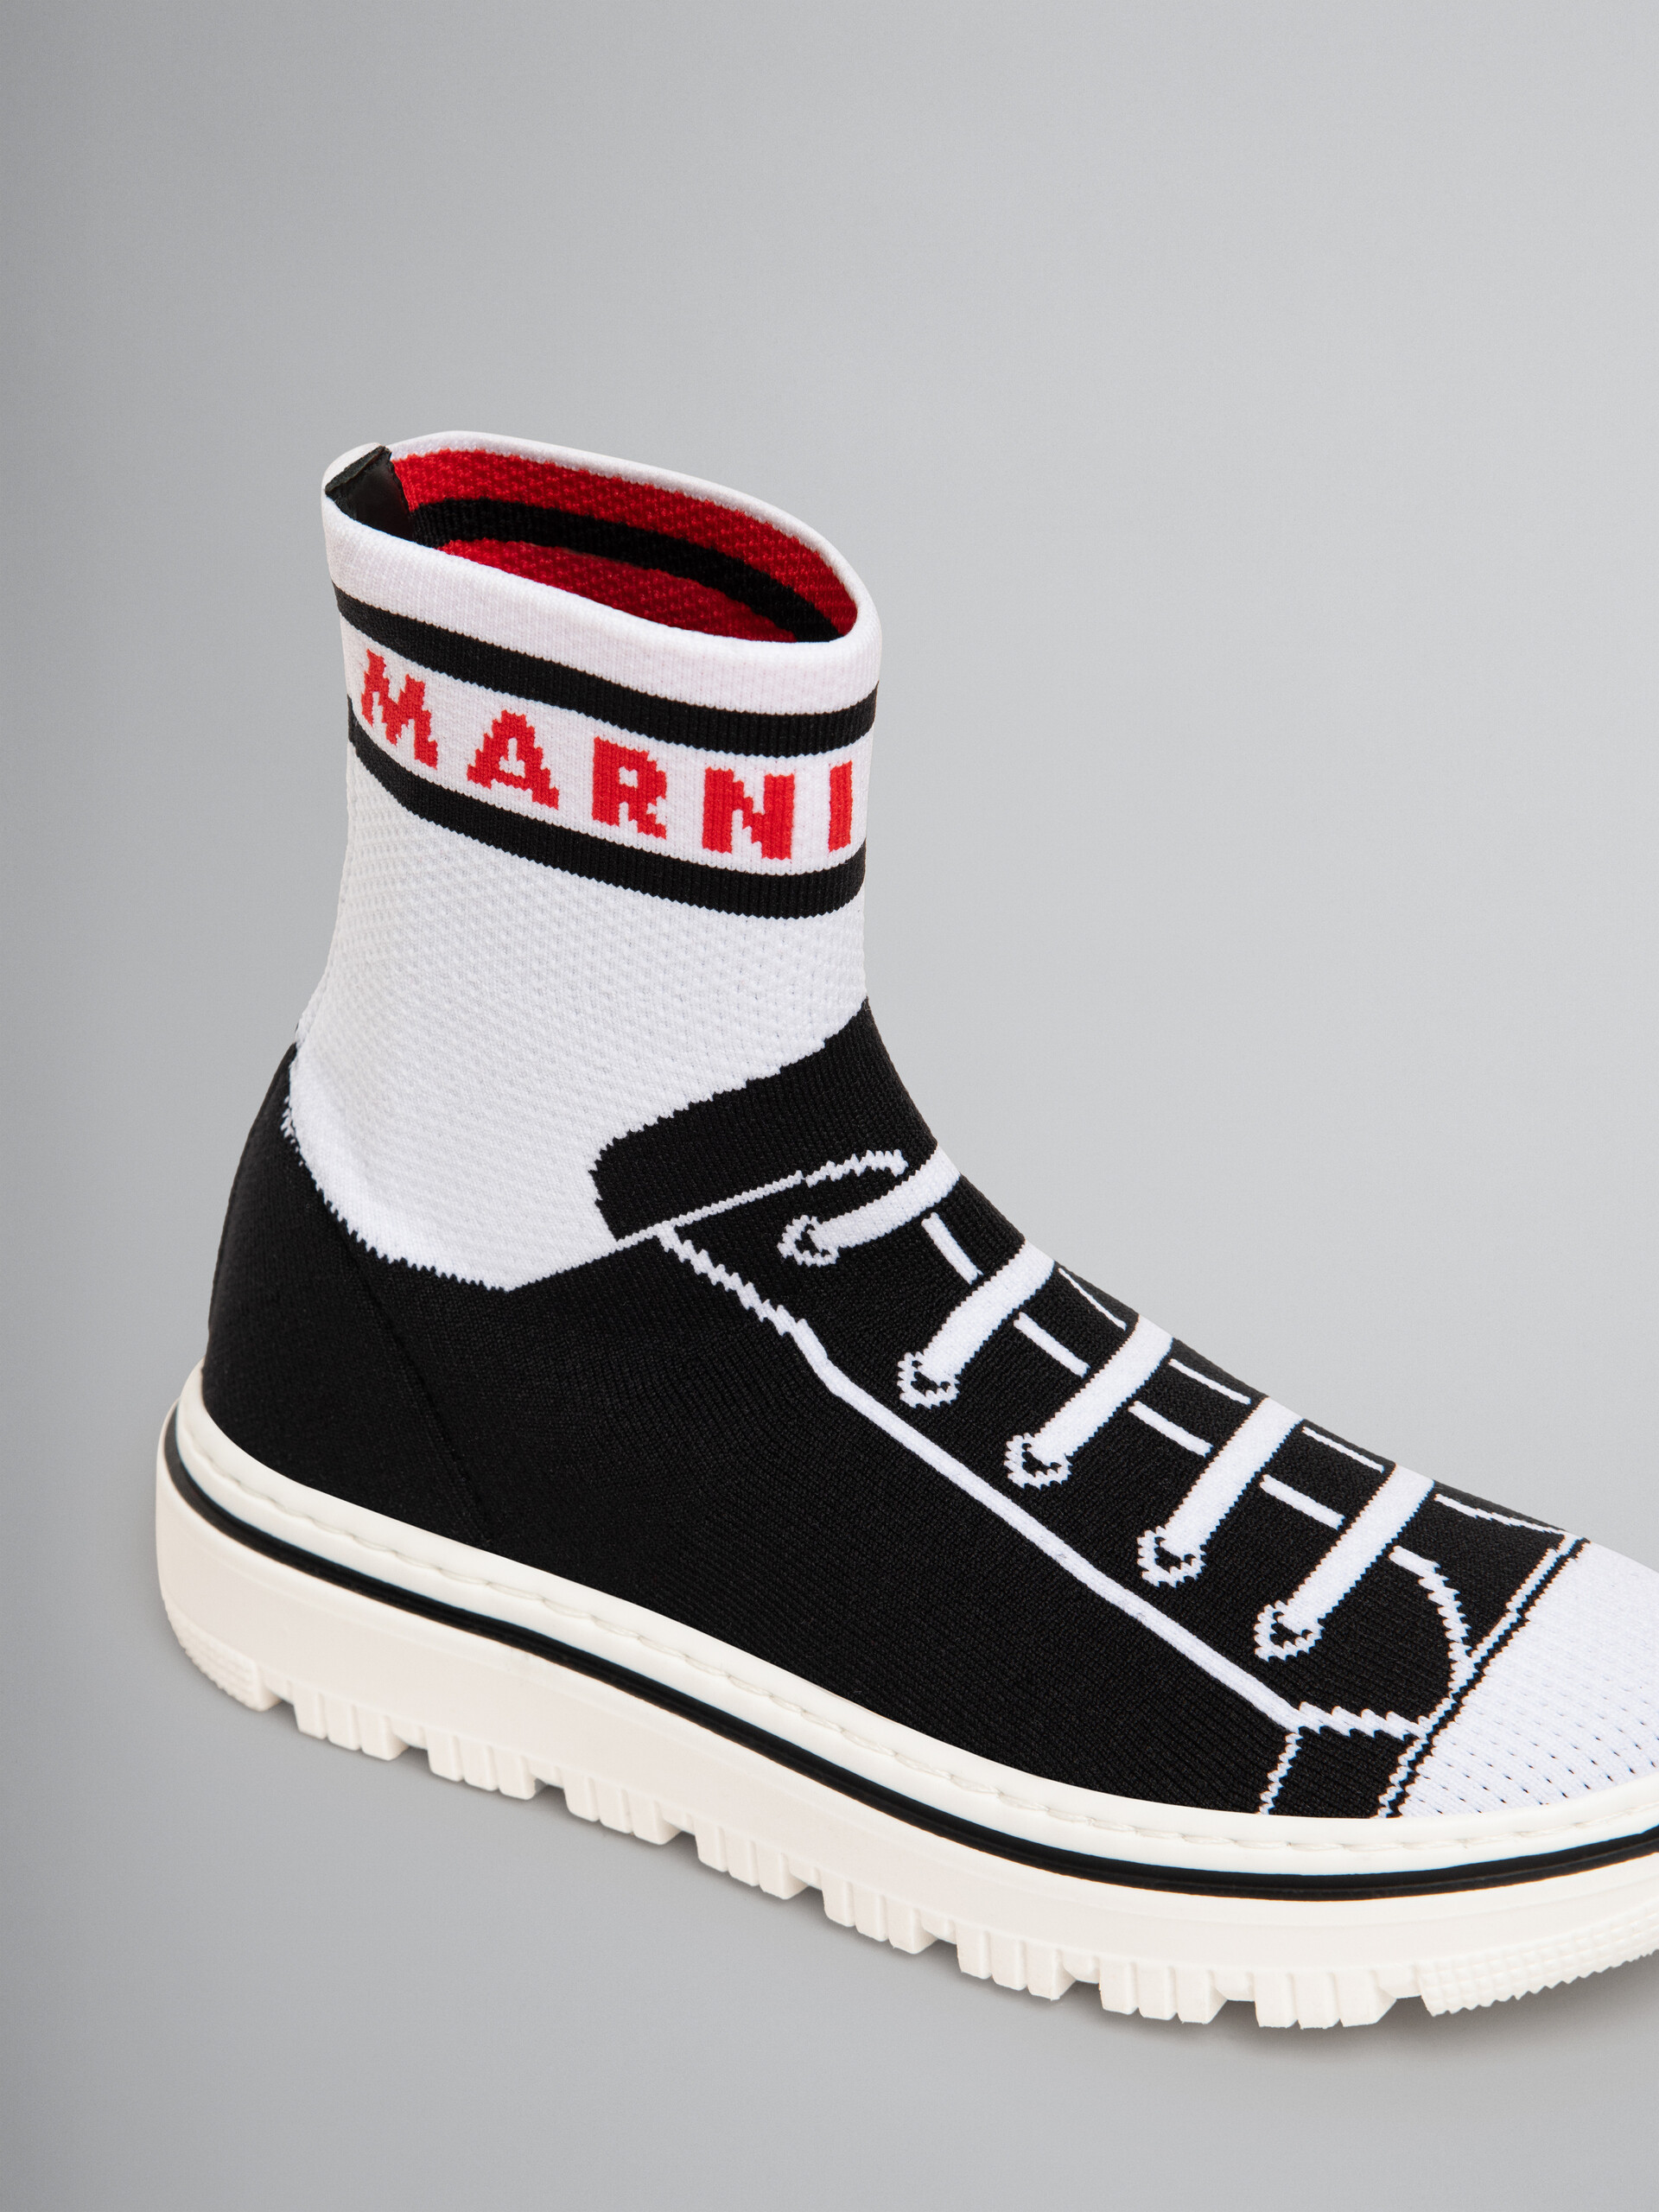 Trompe l'œil jacquard high-top sneaker - Other accessories - Image 4